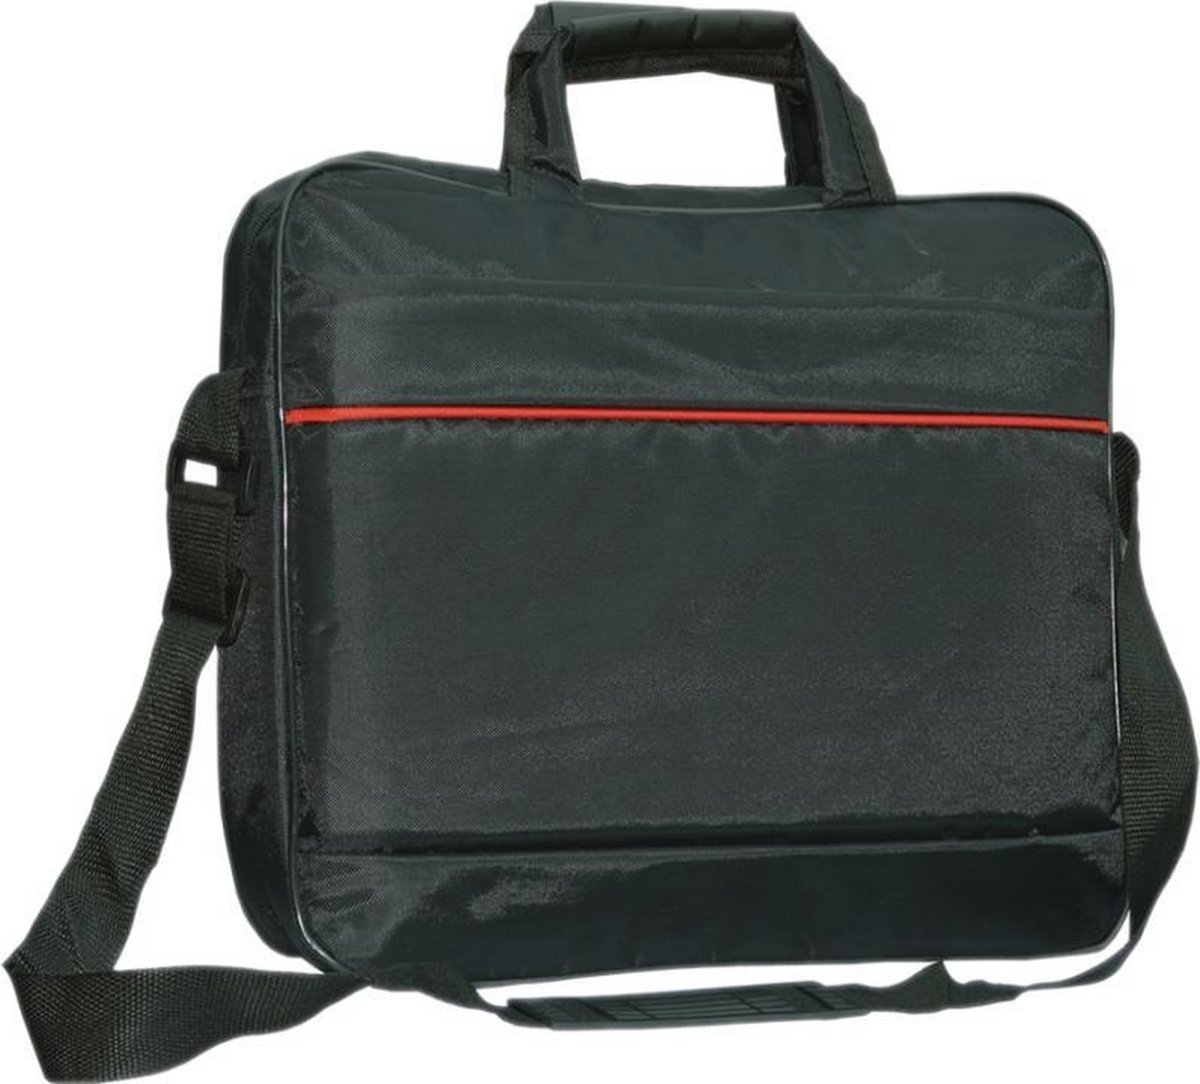 Dell Inspiron 13 7000 laptoptas messenger bag / schoudertas / tas , zwart , merk i12Cover